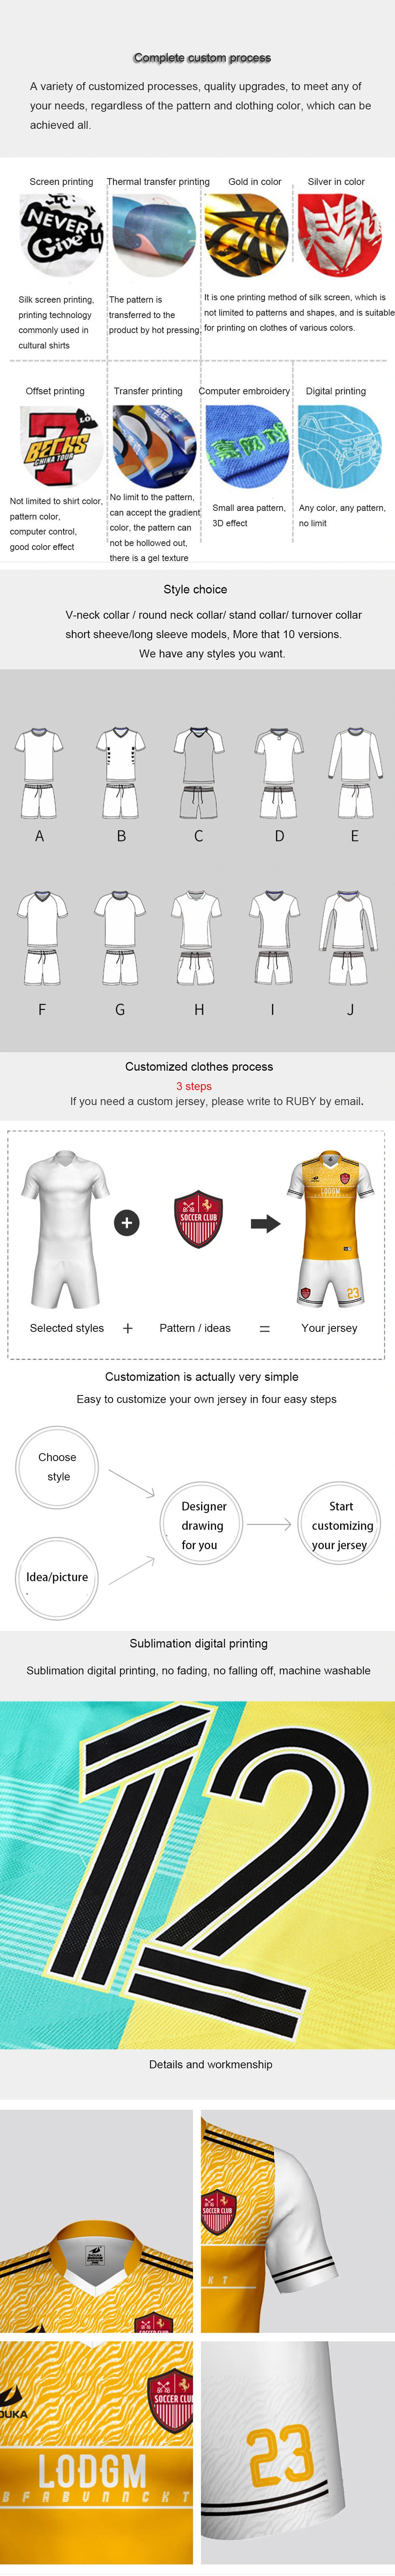 150g Pinhole Soft Fabric Soccer Goalie Jersey Custom Design Short Sleeve Football Team Wear